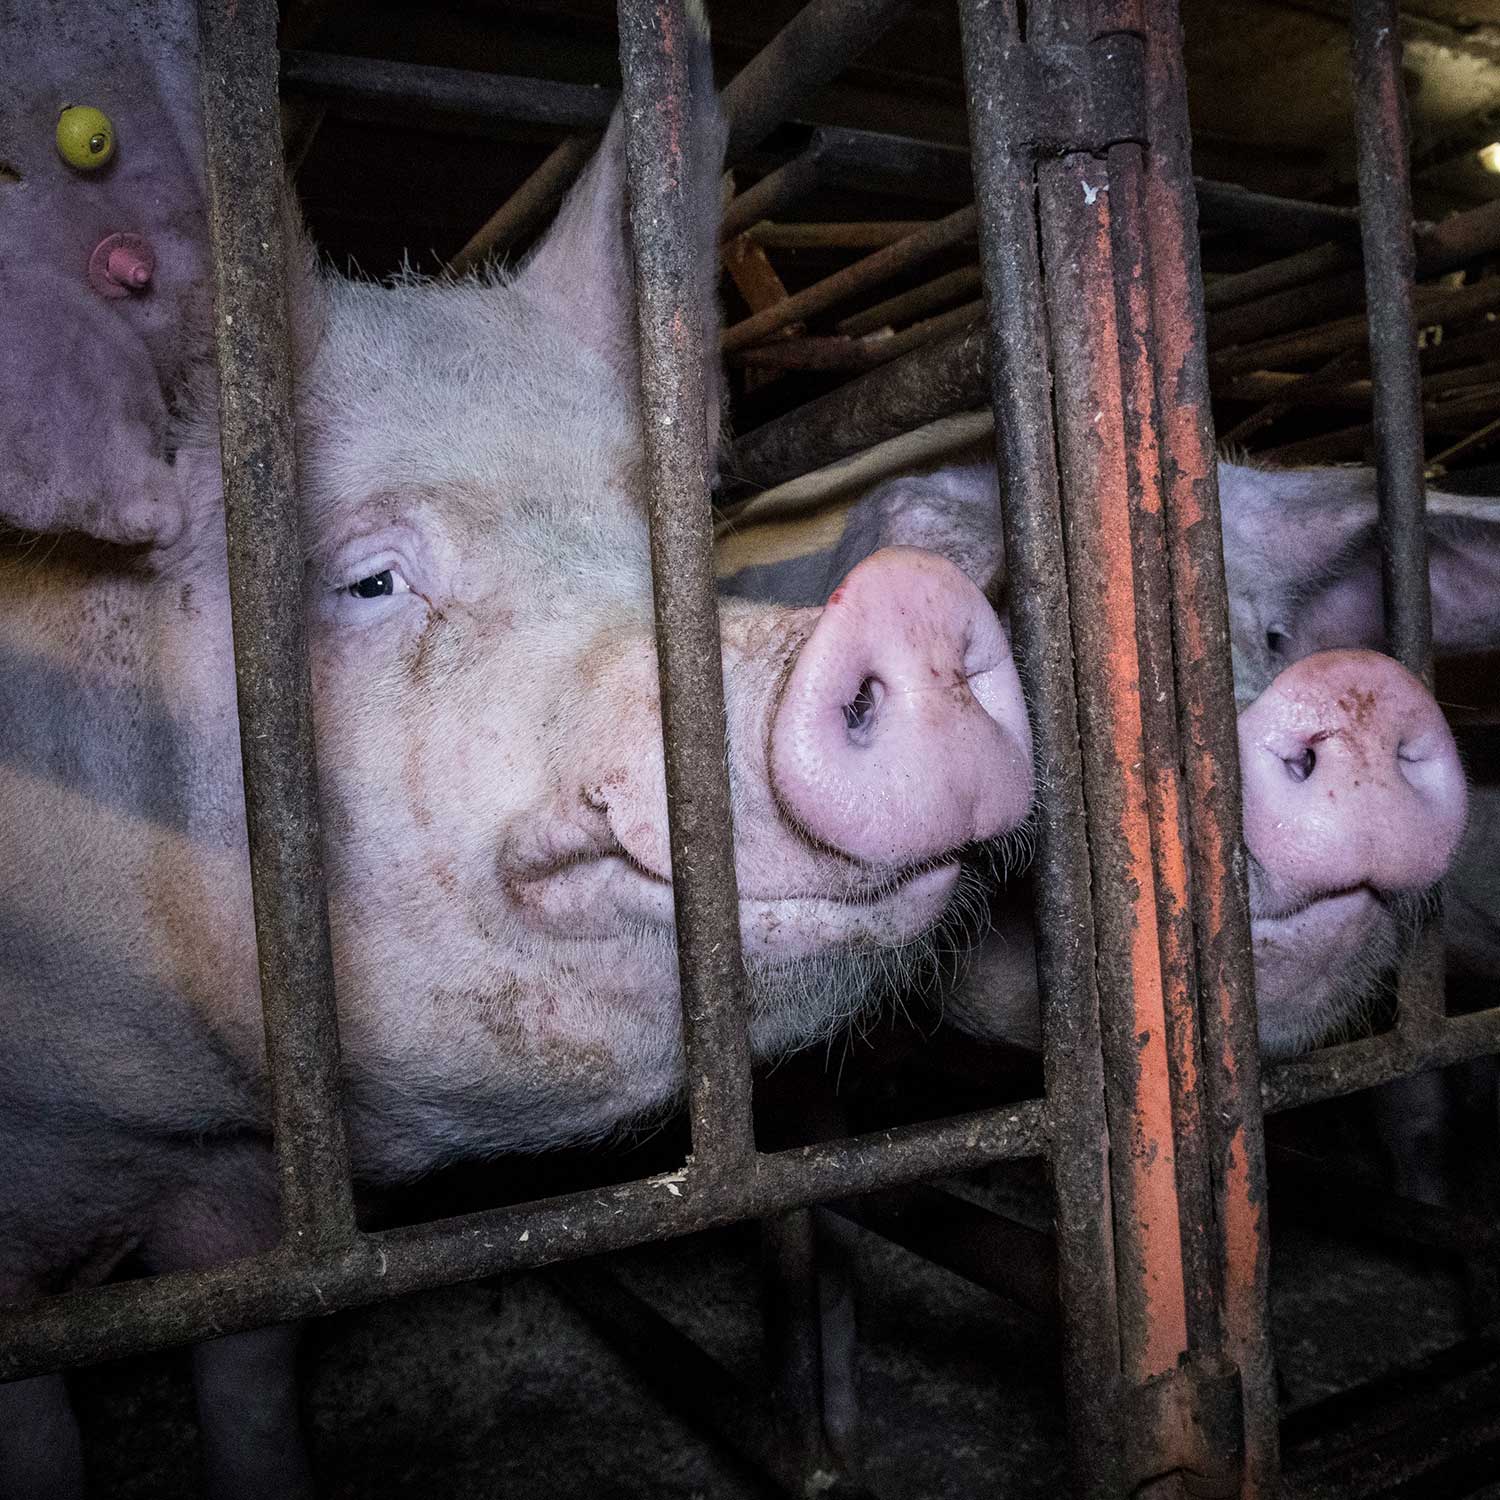 Pigs in gestation crate